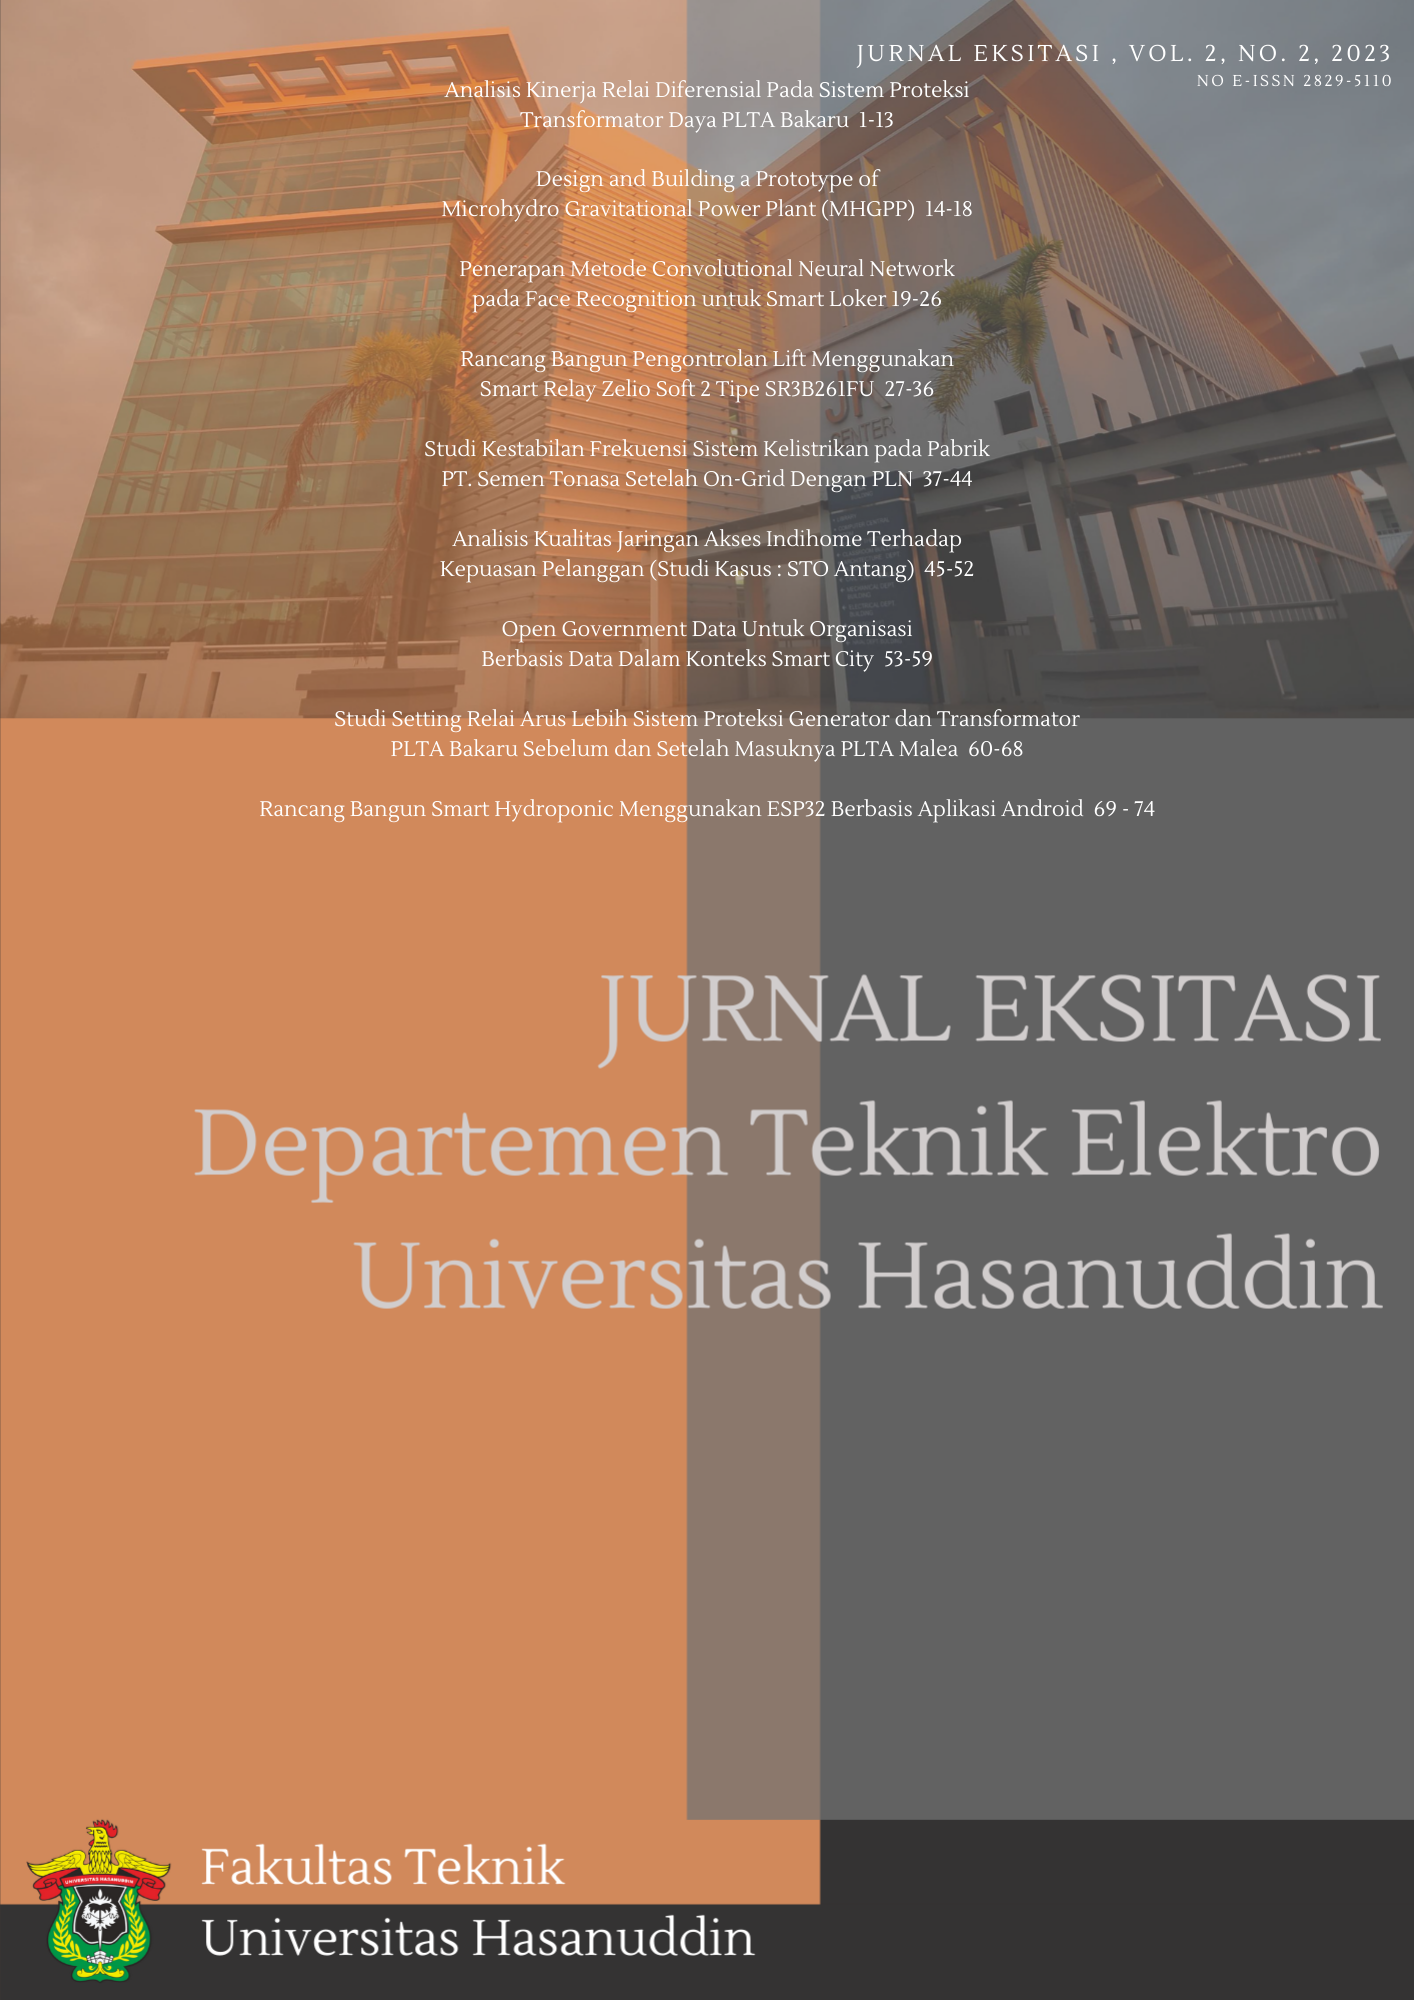 					Lihat Vol 2 No 2 (2023): Jurnal Eksitasi Departemen Teknik Elektro Vol. 2. No.2. 2023
				